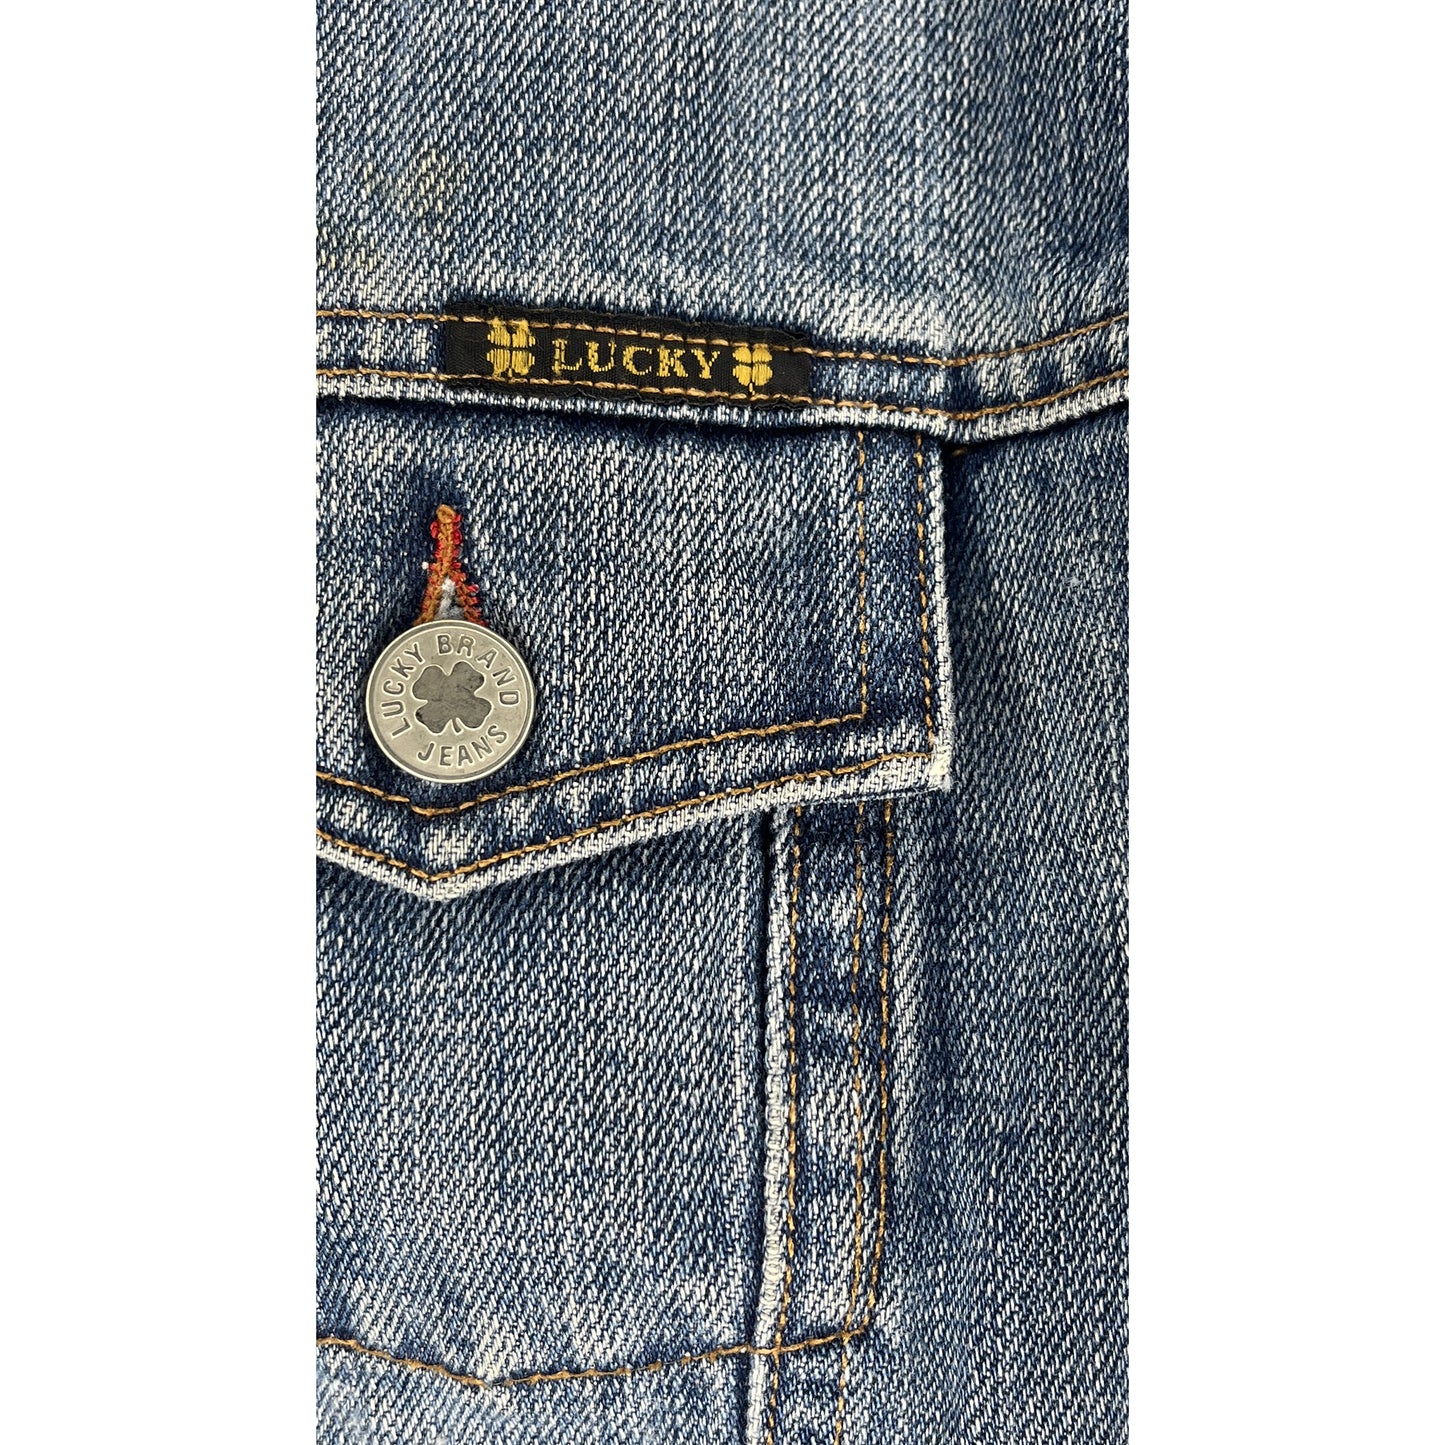 Lucky Brand Denim Jacket Button Down Medium Blue Size M SKU 000425-6